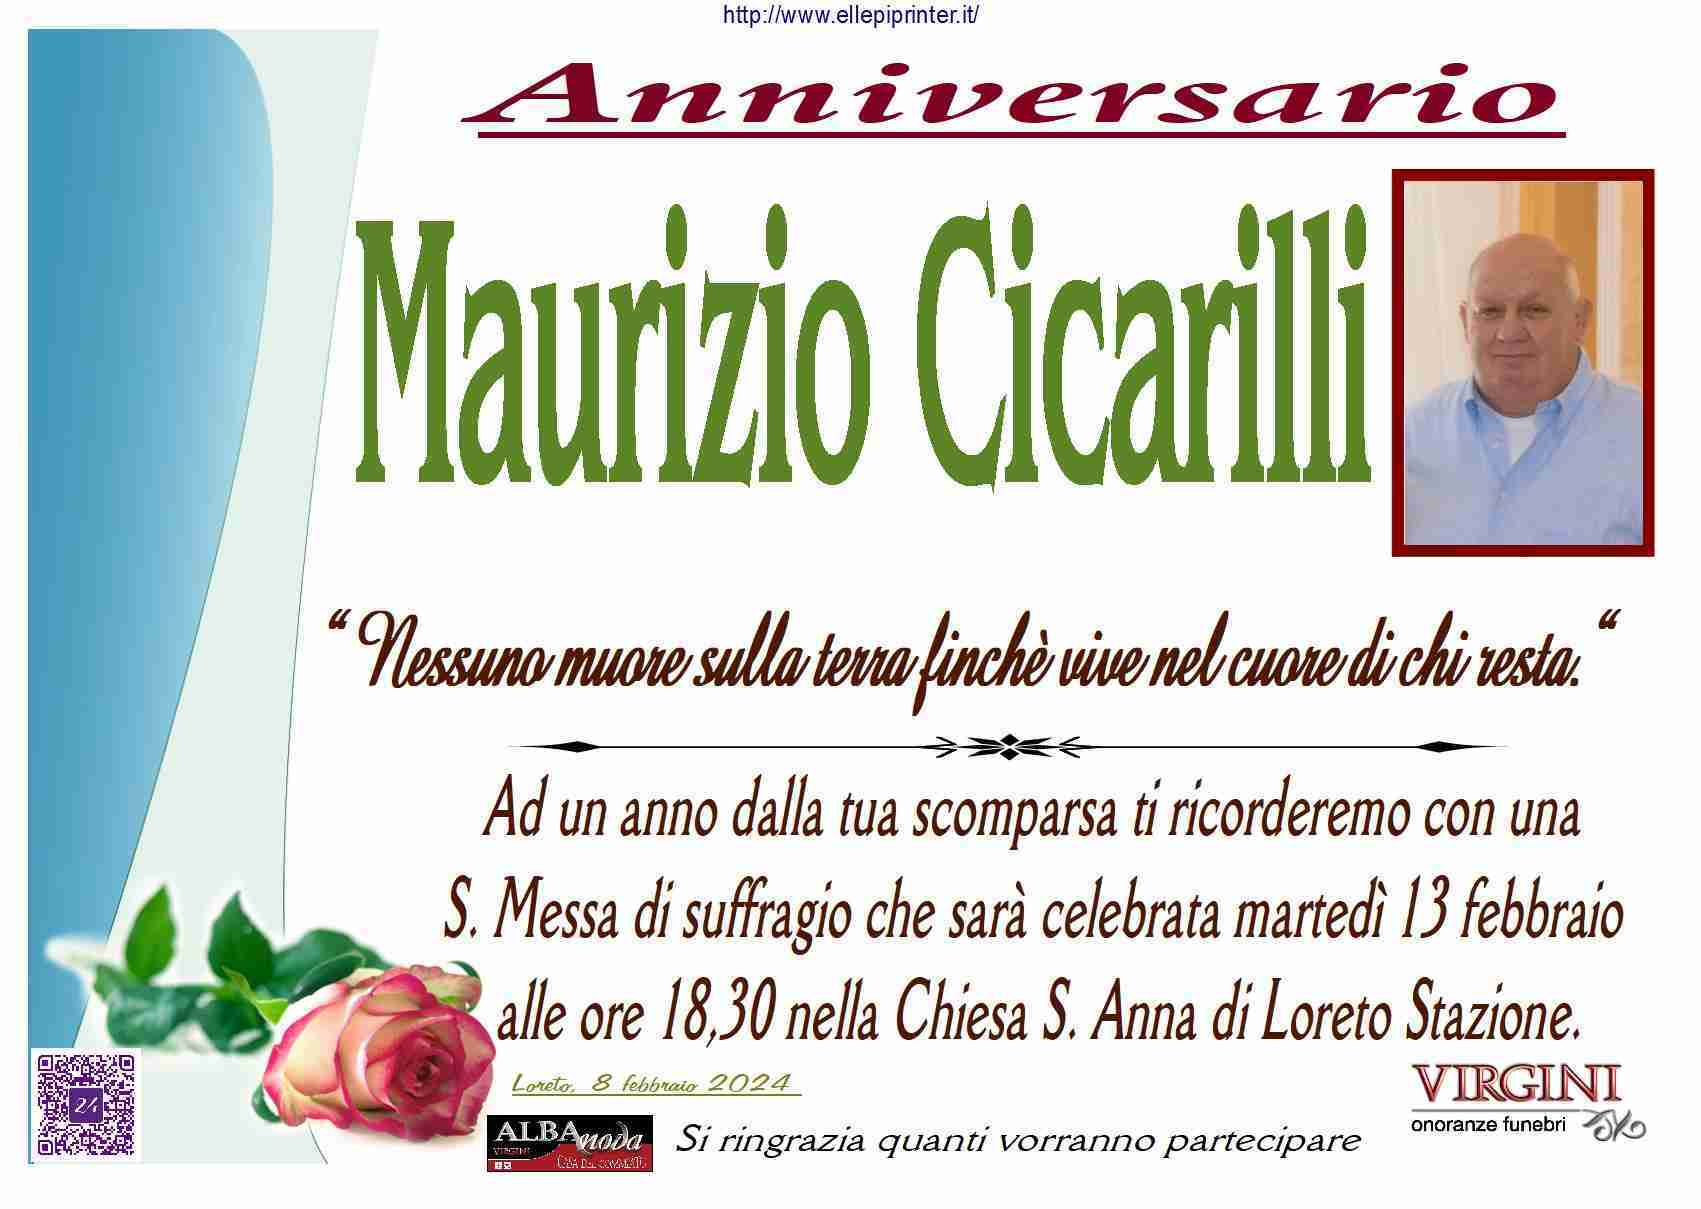 Maurizio Cicarilli